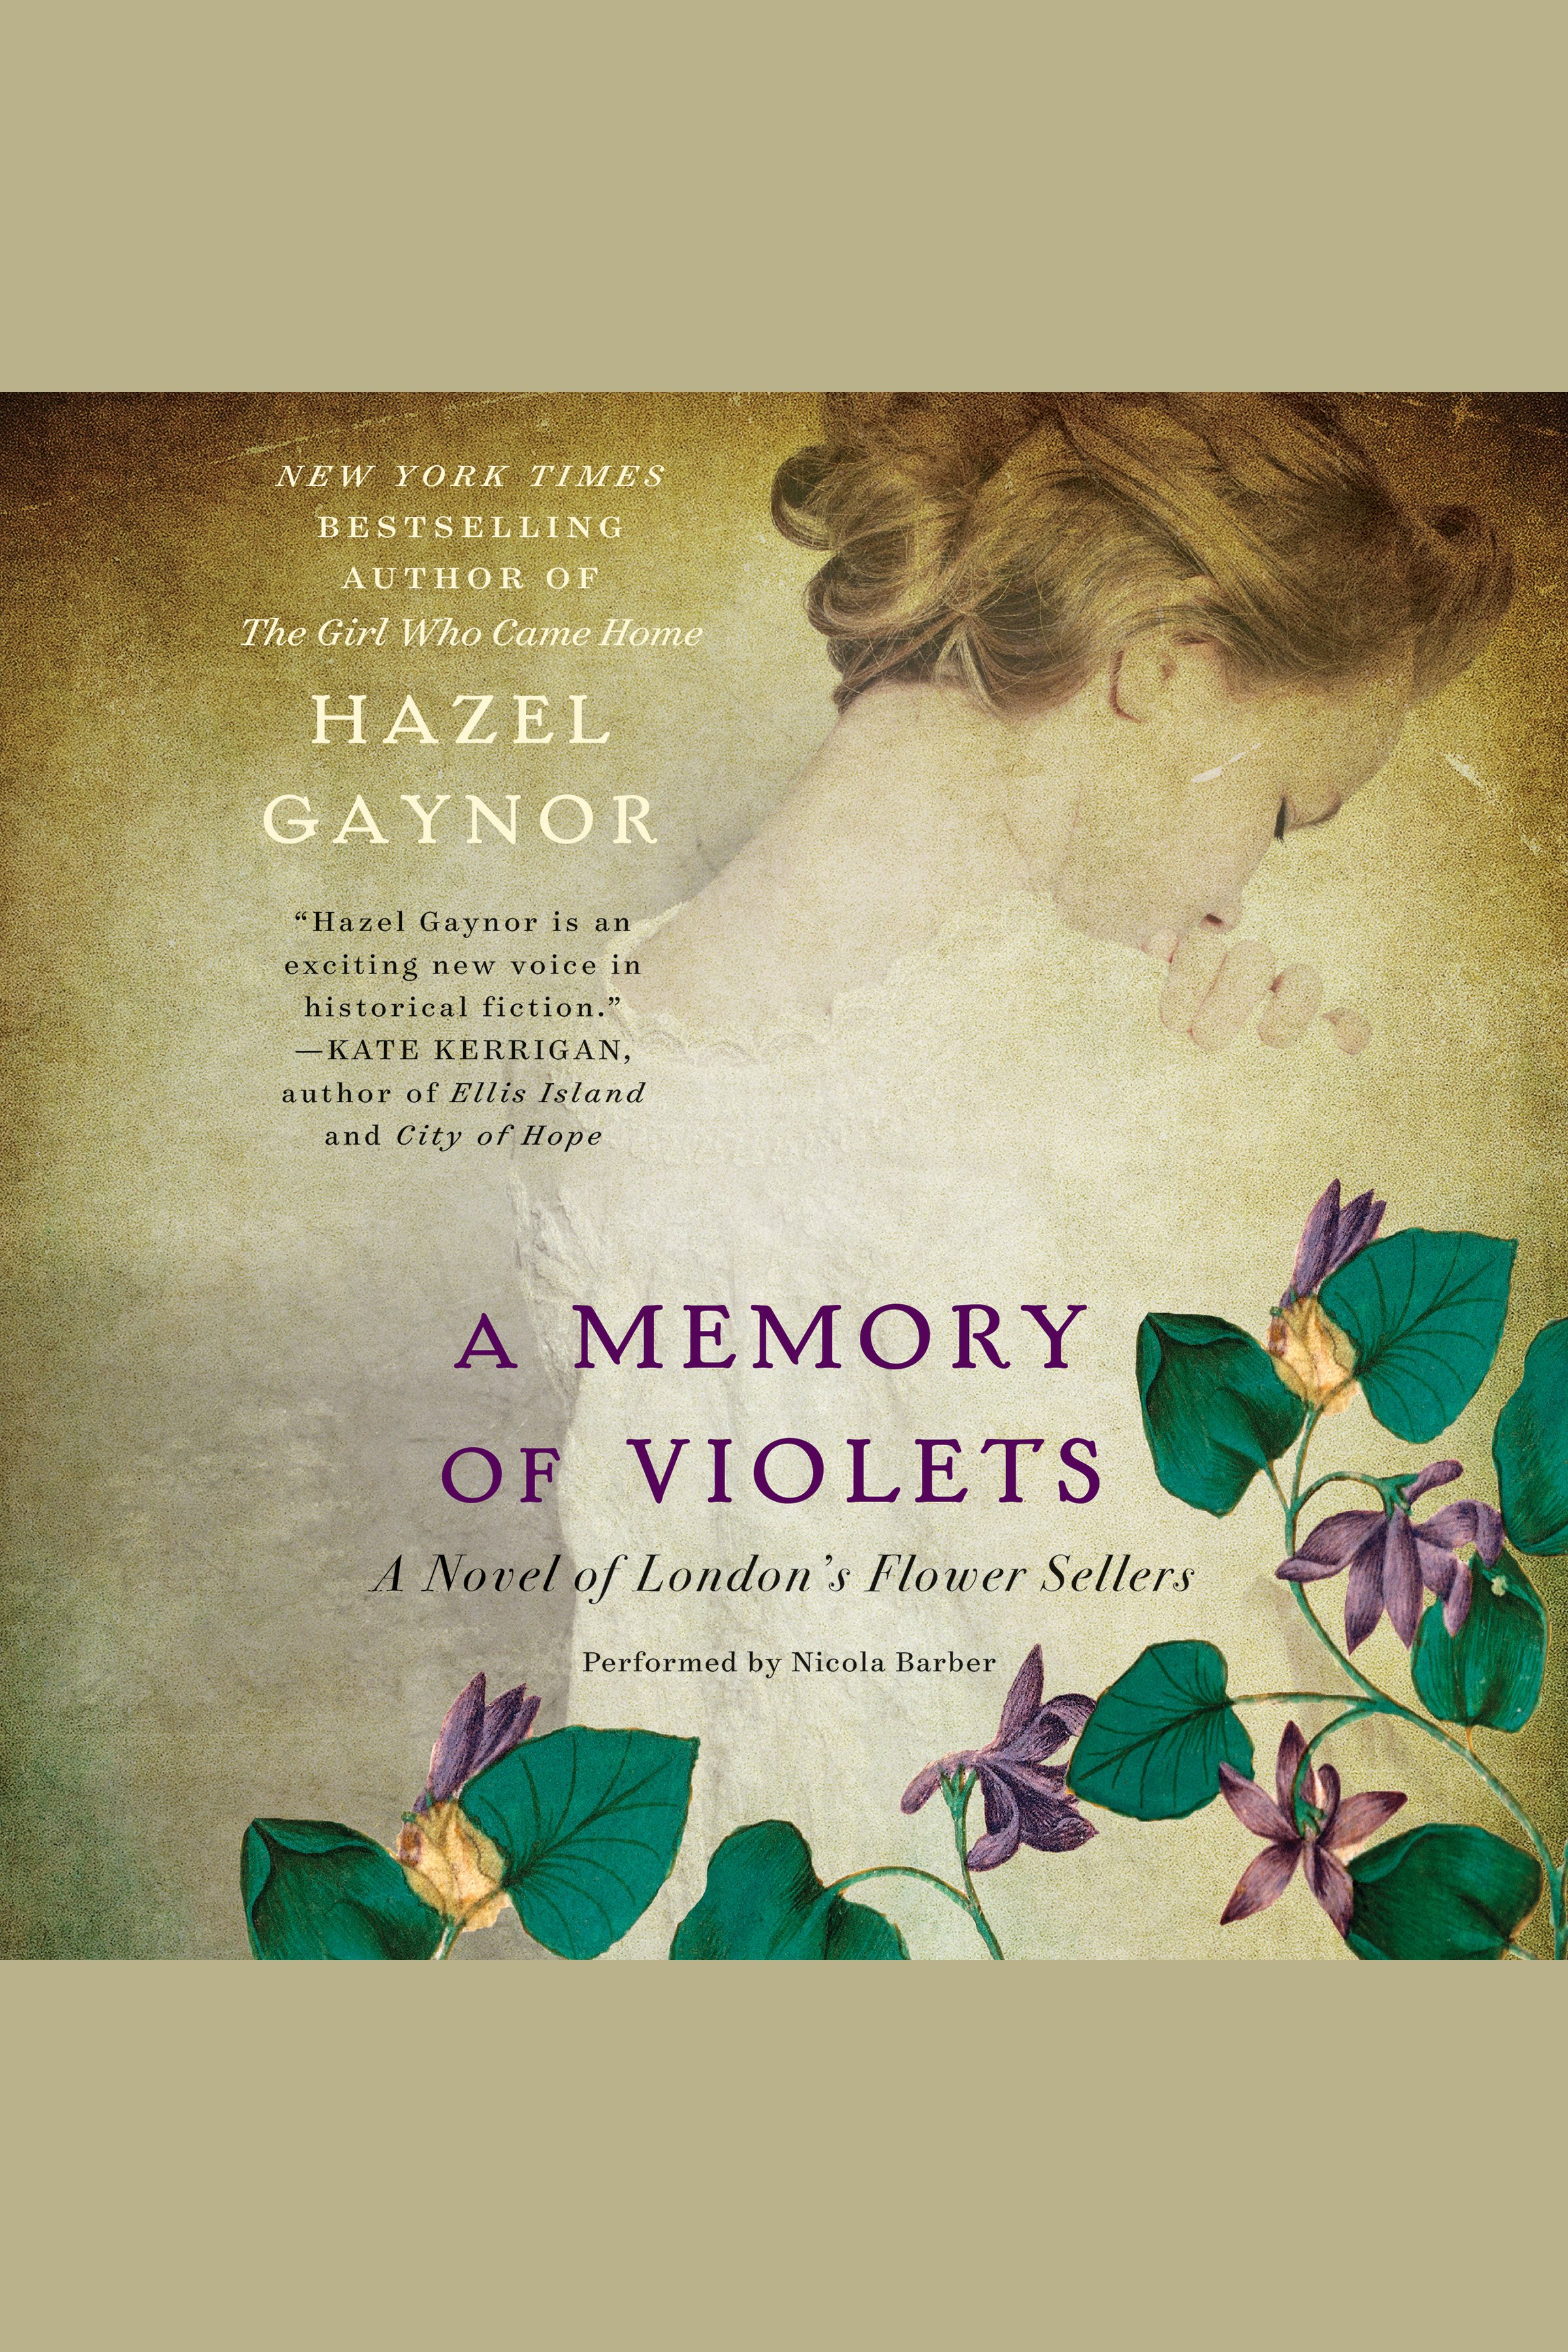 Image de couverture de Memory of Violets, A [electronic resource] : A Novel of London's Flower Sellers